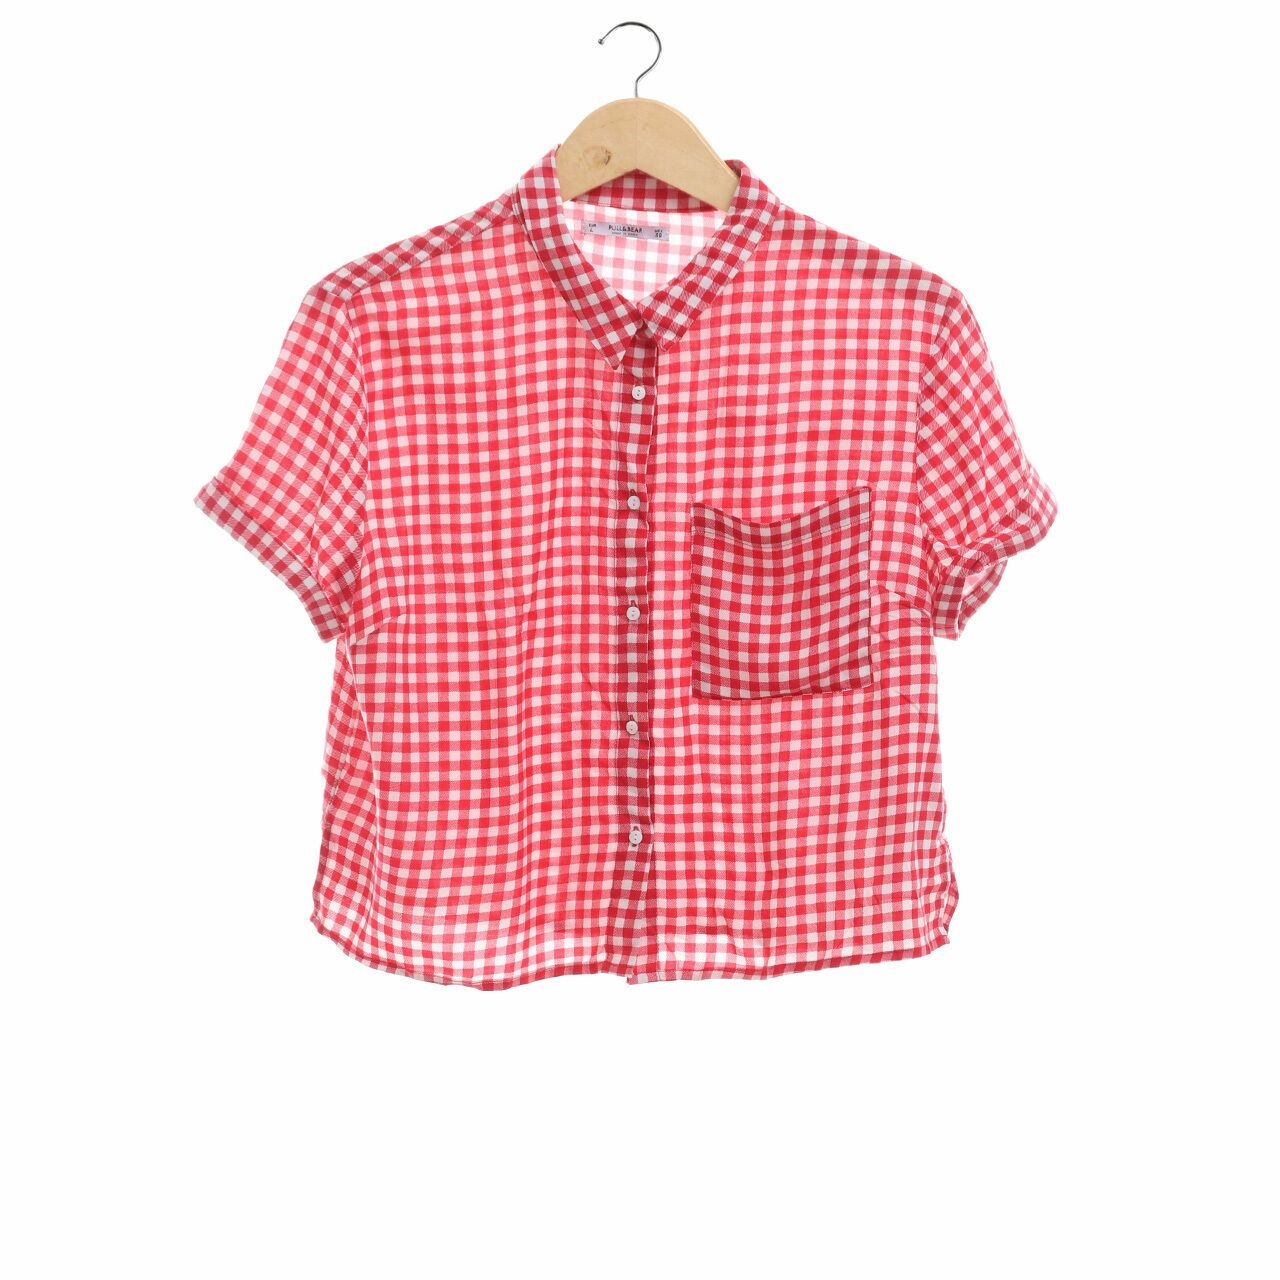 Pull & Bear Red & White Checkered Shirt